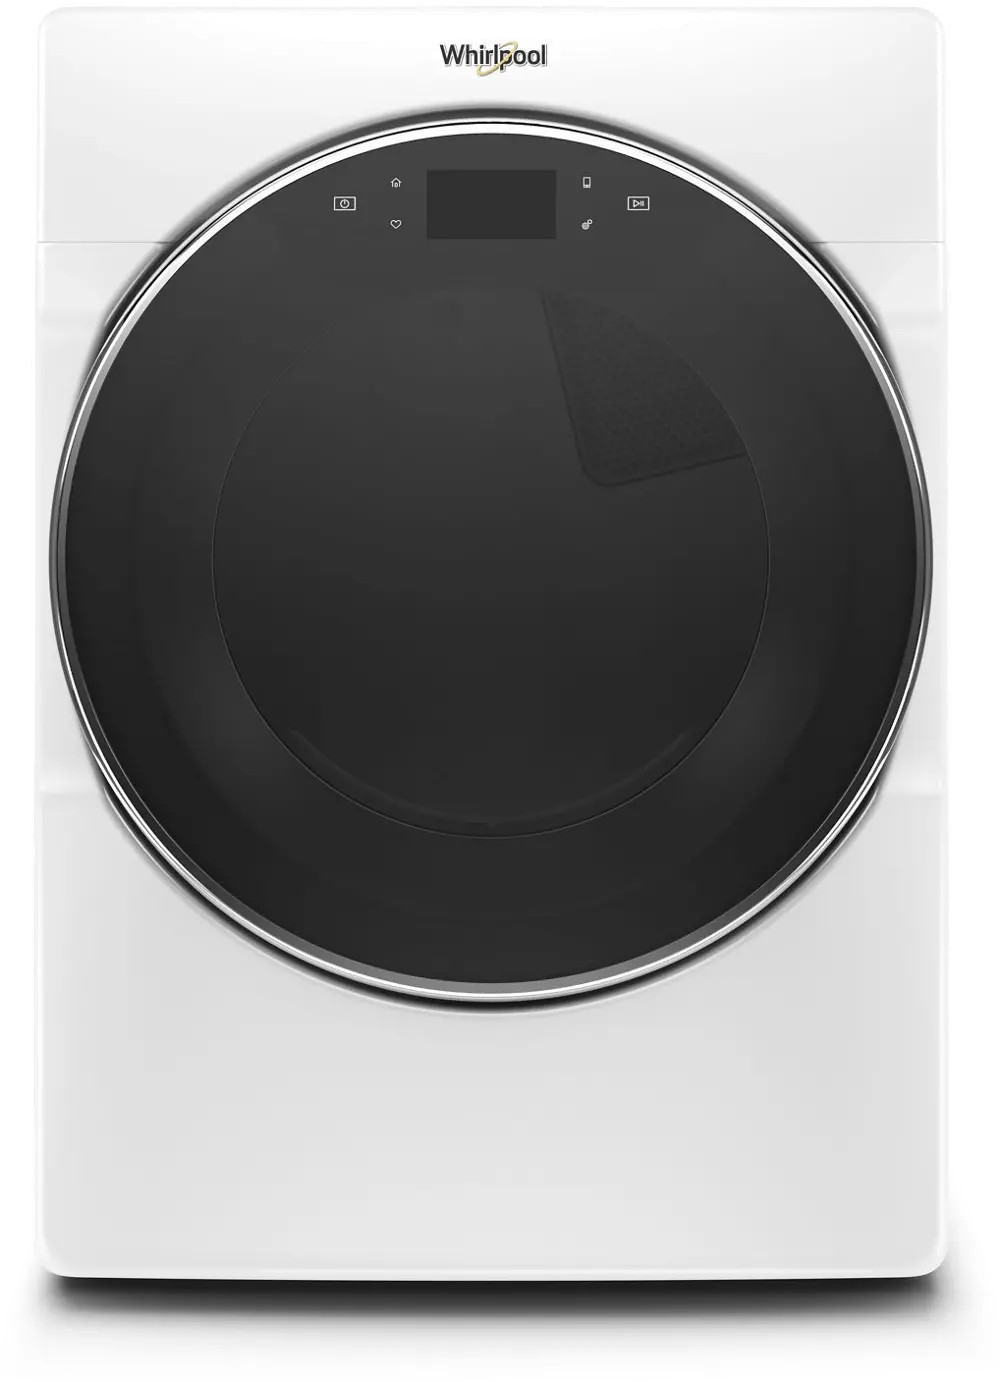 WGD9620HW Whirlpool 7.4 cu. ft. Smart Front Load Gas Dryer - White-1